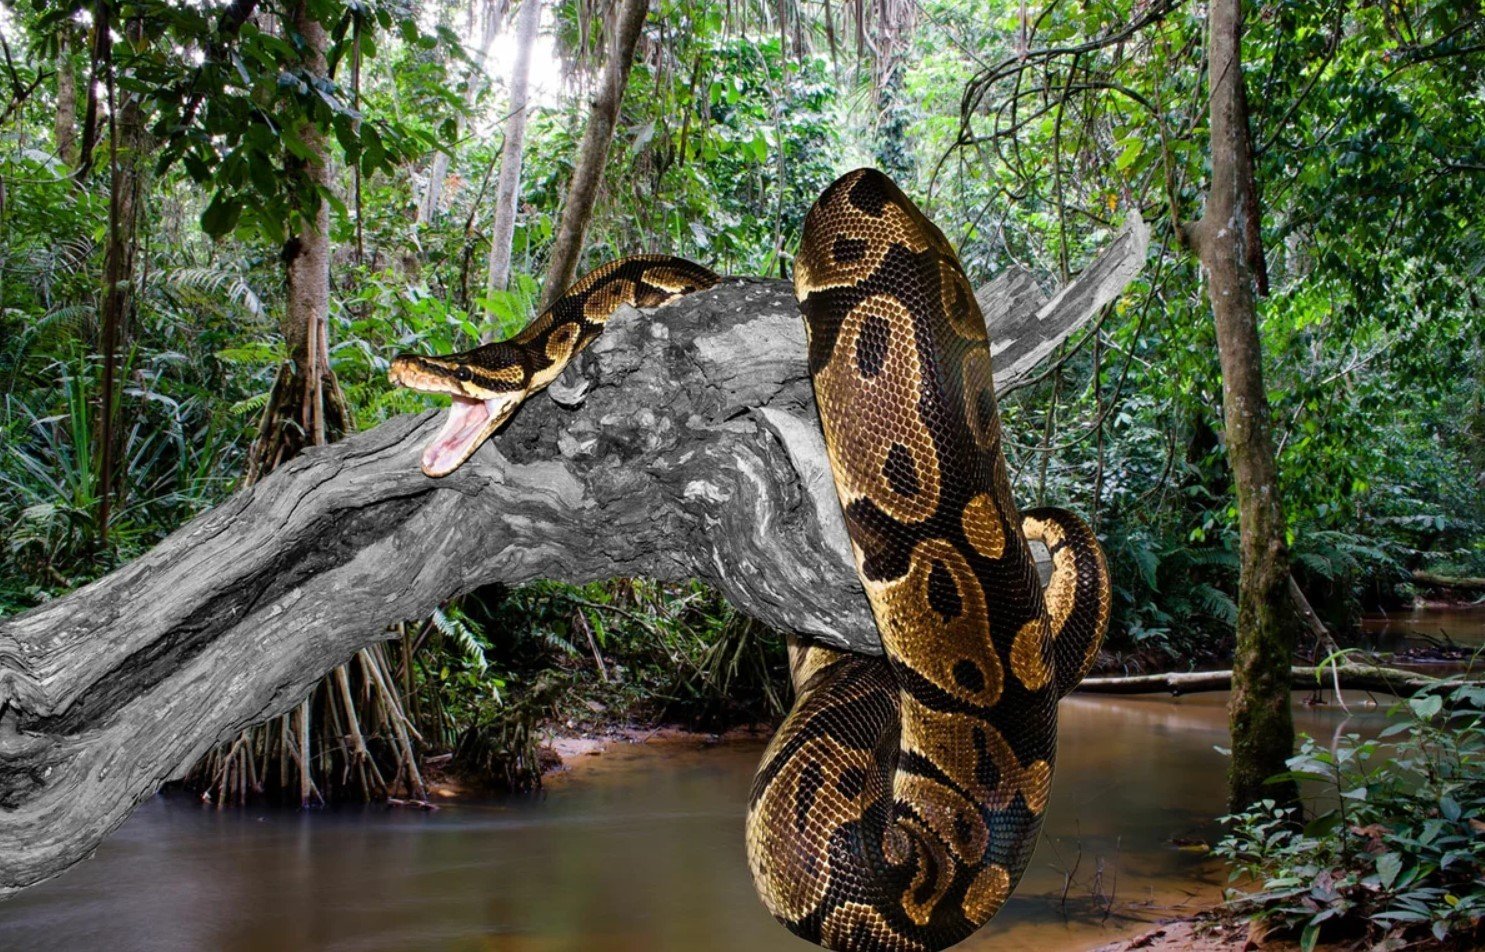 Змеи в тропическом лесу. Река Амазонка змея Анаконда. Южная Америка Амазонка Анаконда. Анакондой сельвы Южной Америке. Водяной удав Анаконда.